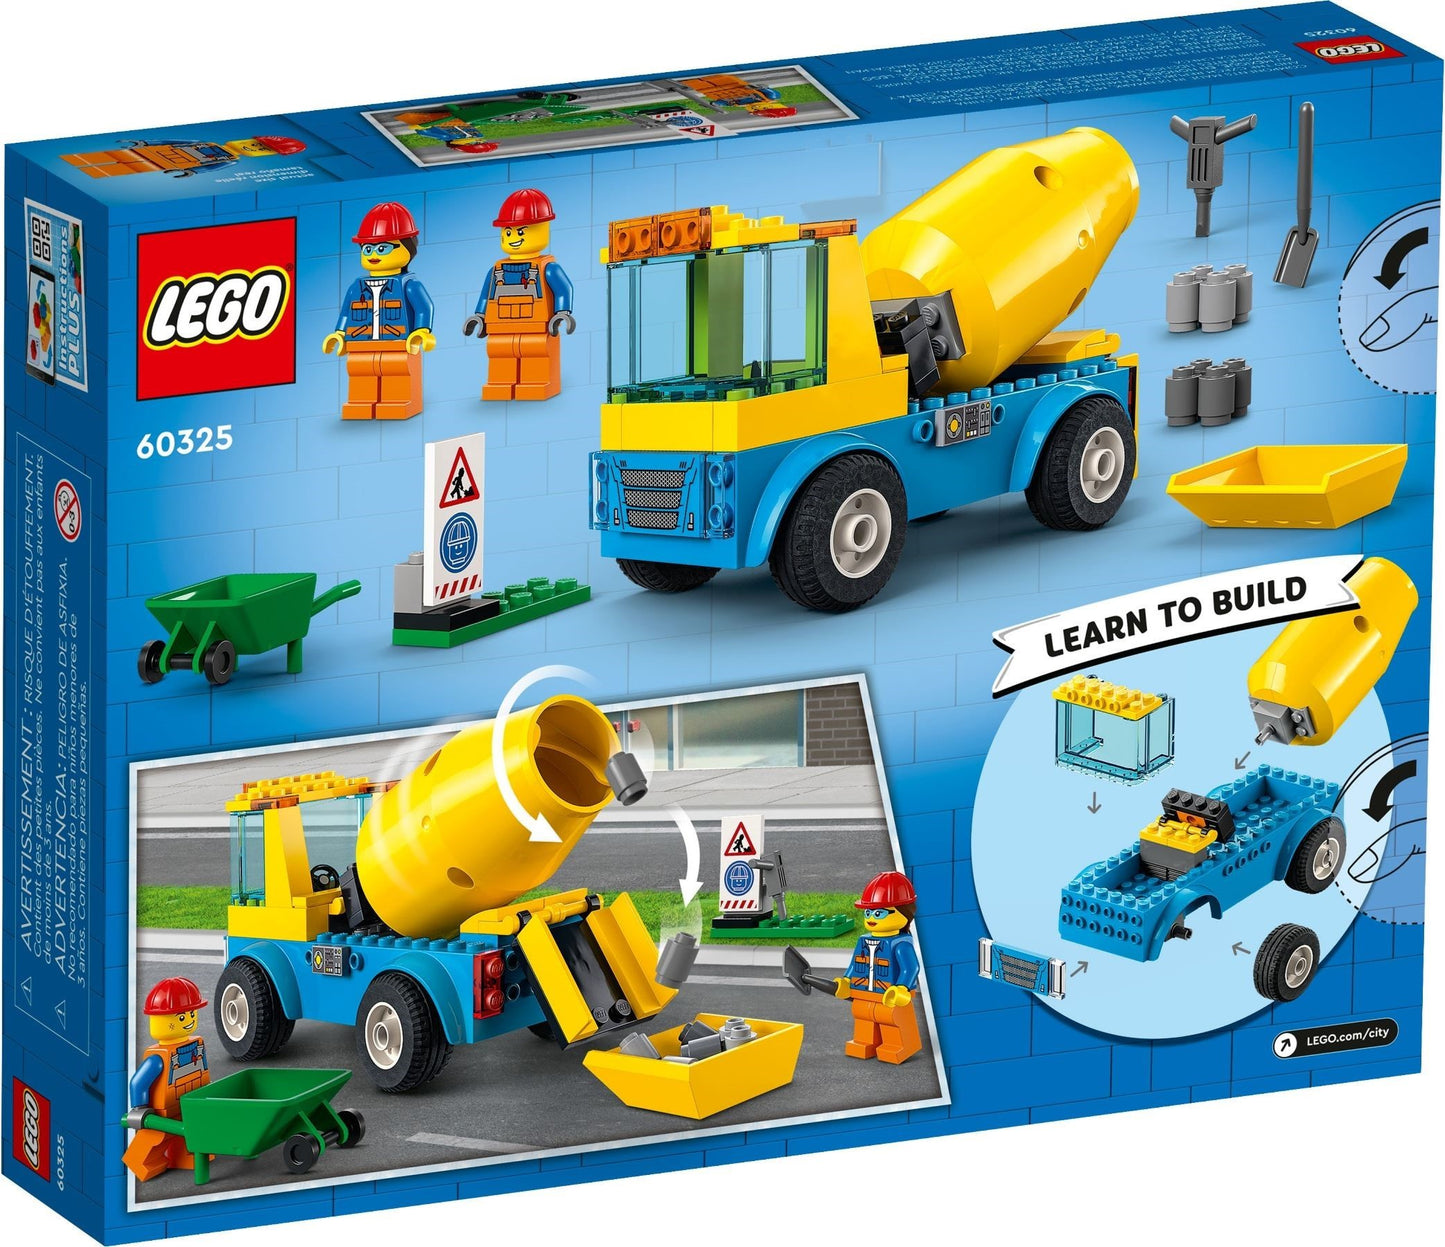 60325 - LEGO City Autobetoniera